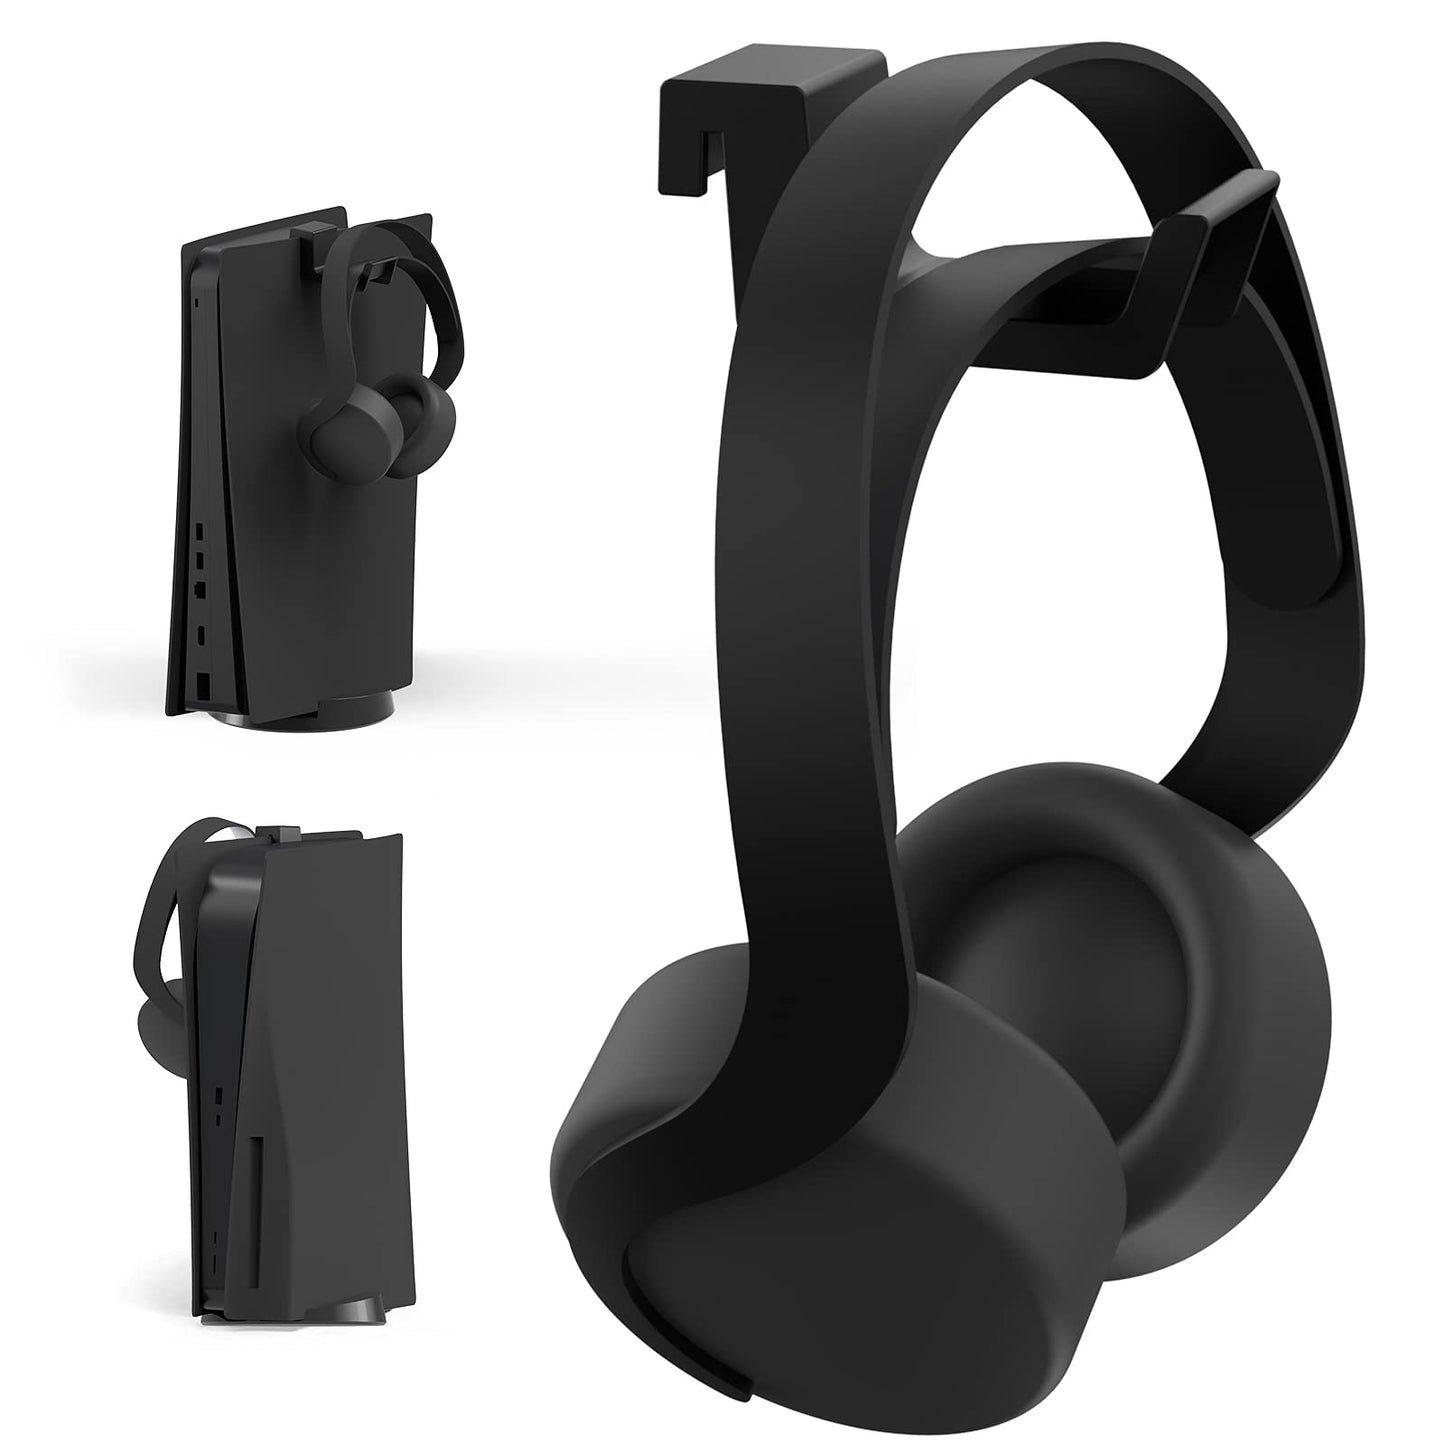 NexiGo PS5 Headphone Holder, [Minimalist Design] Mini Headphone Hanger with Supporting Bar, for Sony Playstation 5 Gaming Headset, Black - Opticdeals